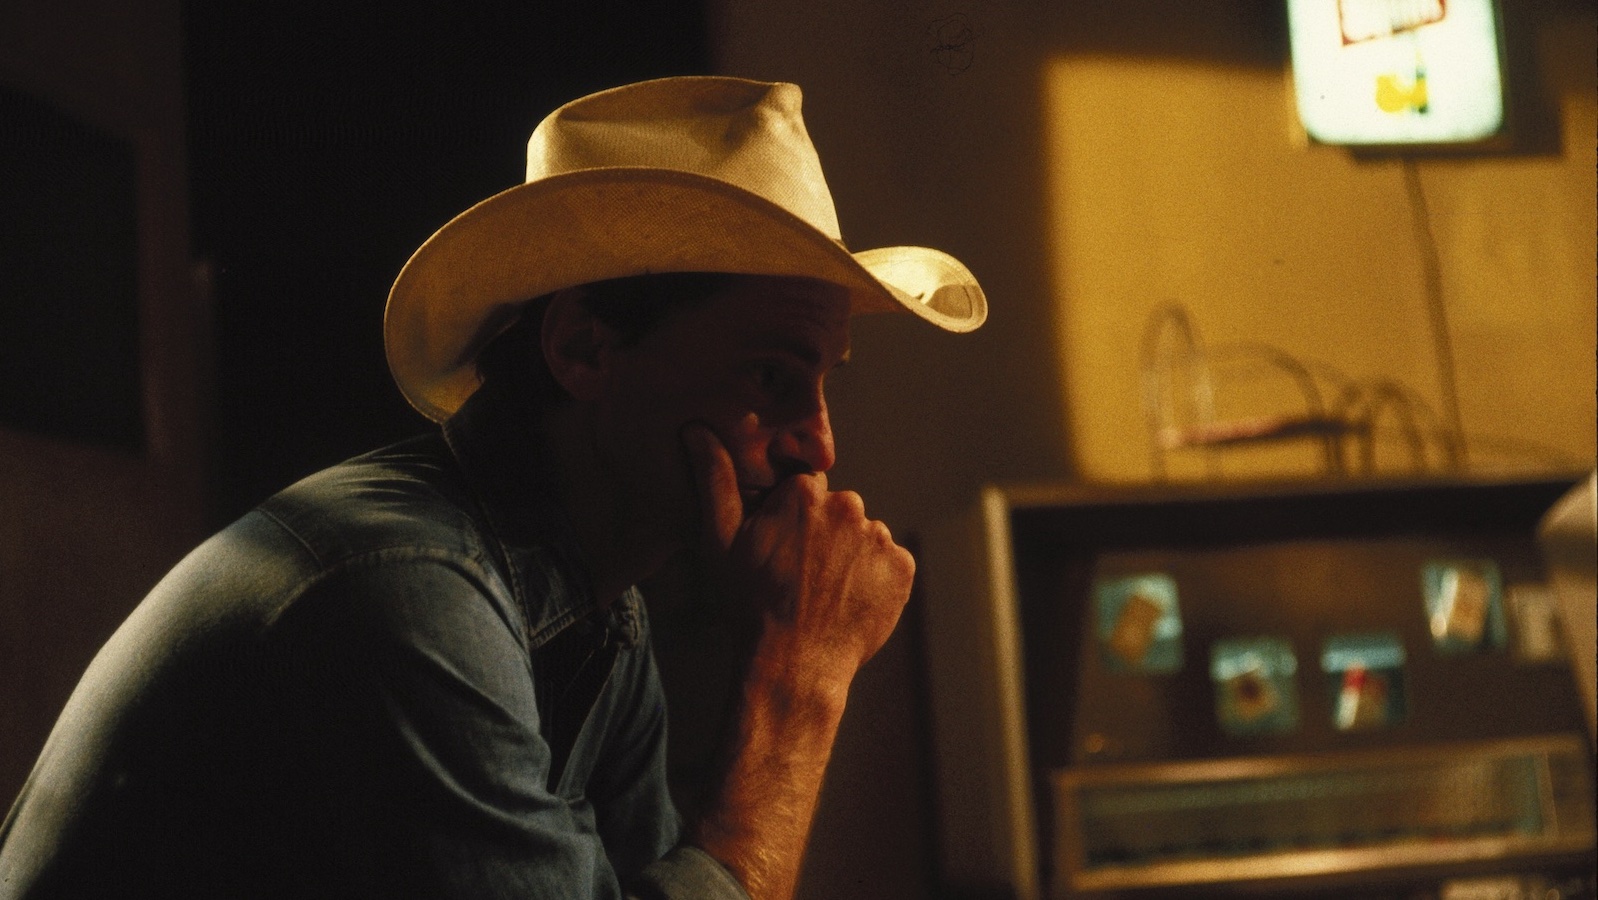 A man in shadow in a motel room wearing a stetson in profile